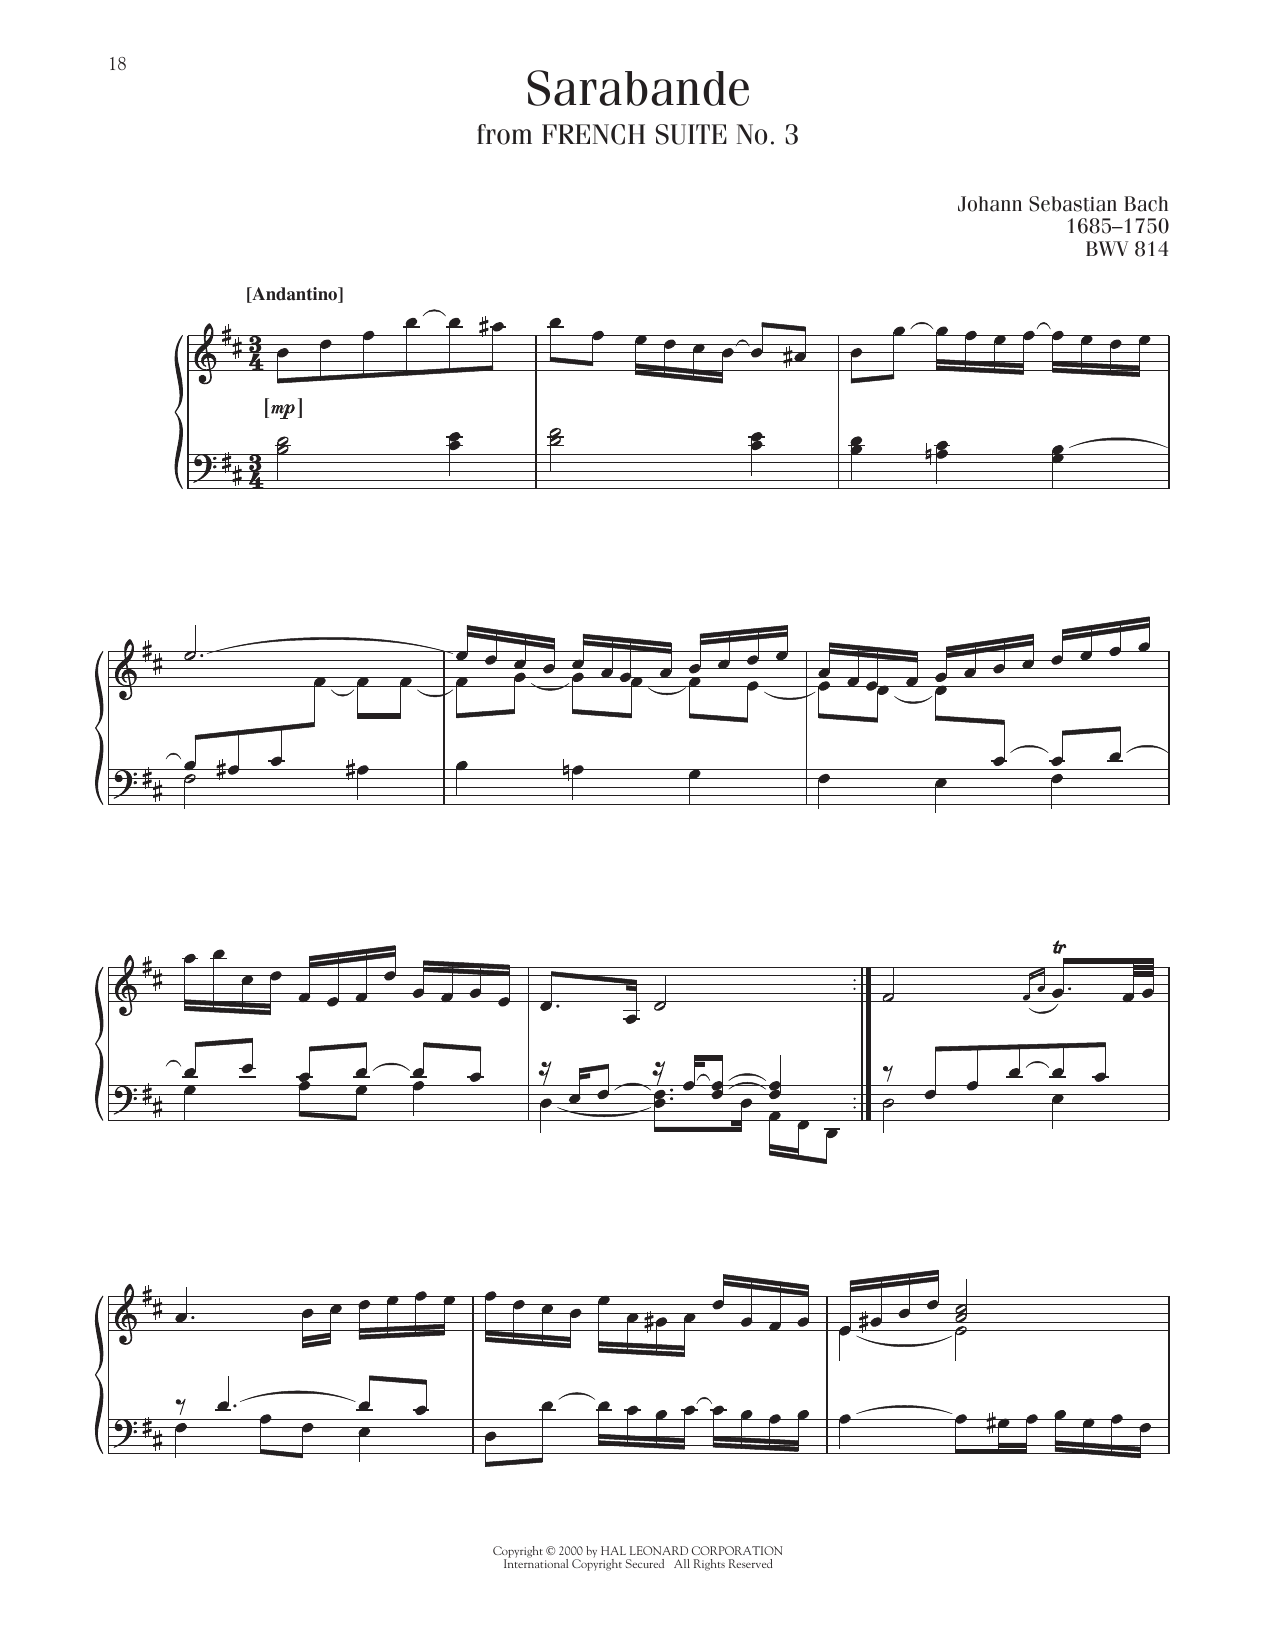 Johann Sebastian Bach Sarabande, BWV 814 Sheet Music Notes & Chords for Piano Solo - Download or Print PDF